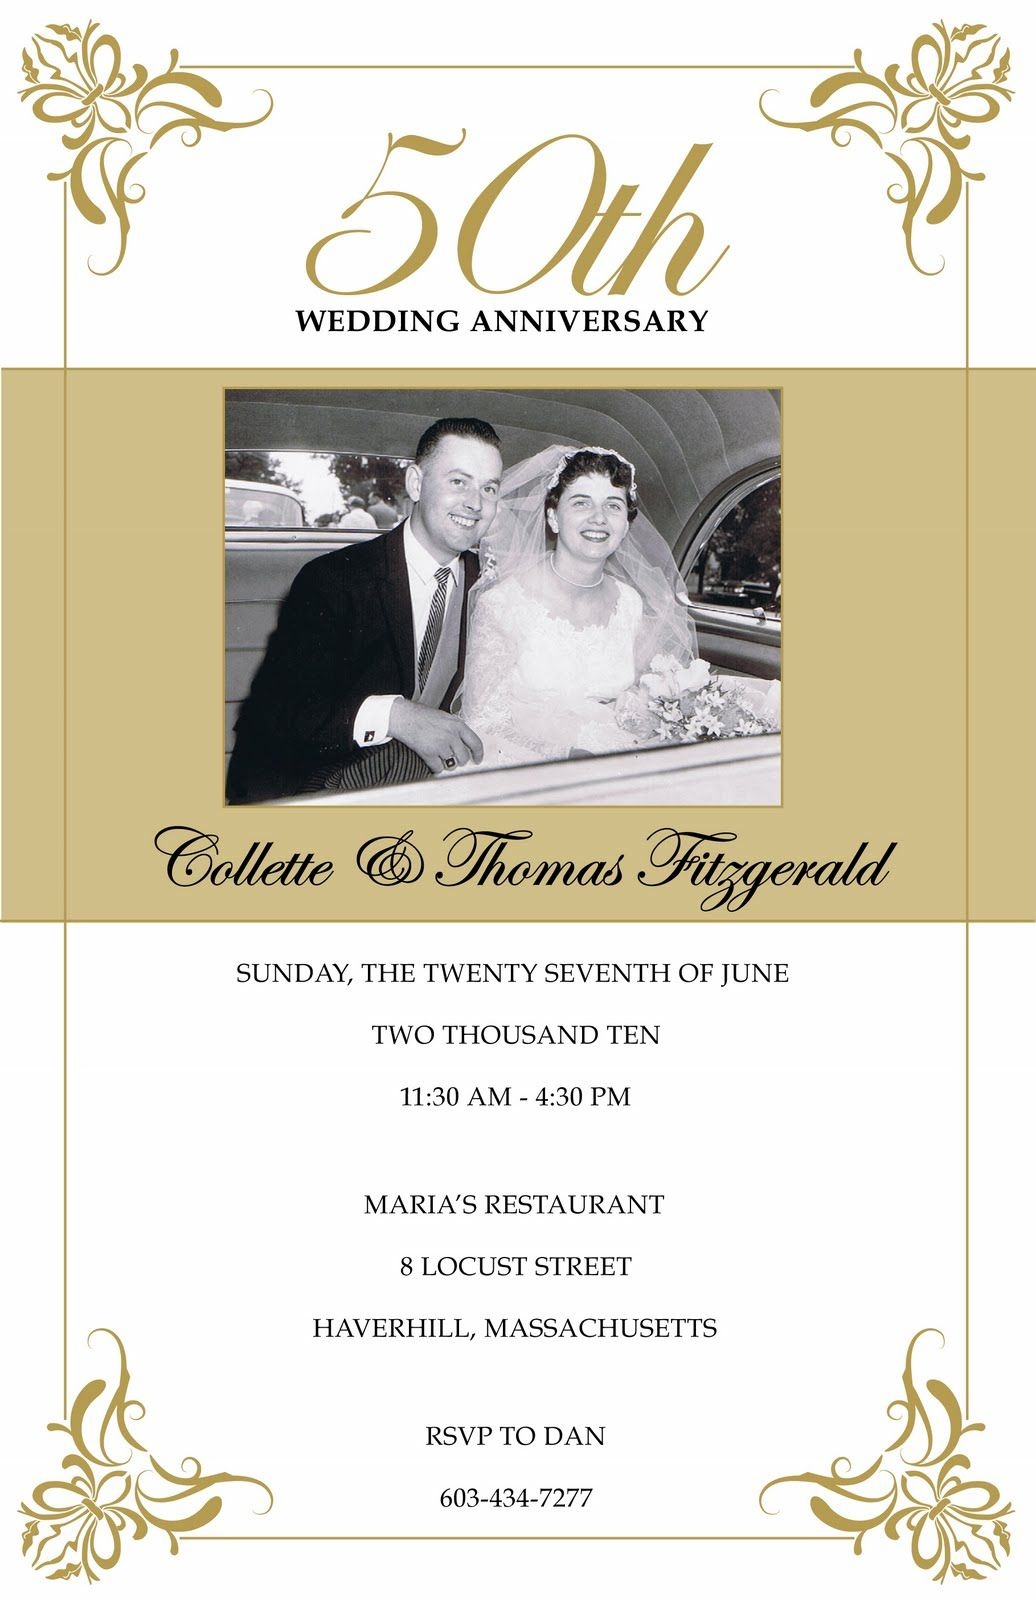 Photo Gallery Of The 50Th Wedding Anniversary Party Ideas To - Free Printable 60Th Wedding Anniversary Invitations